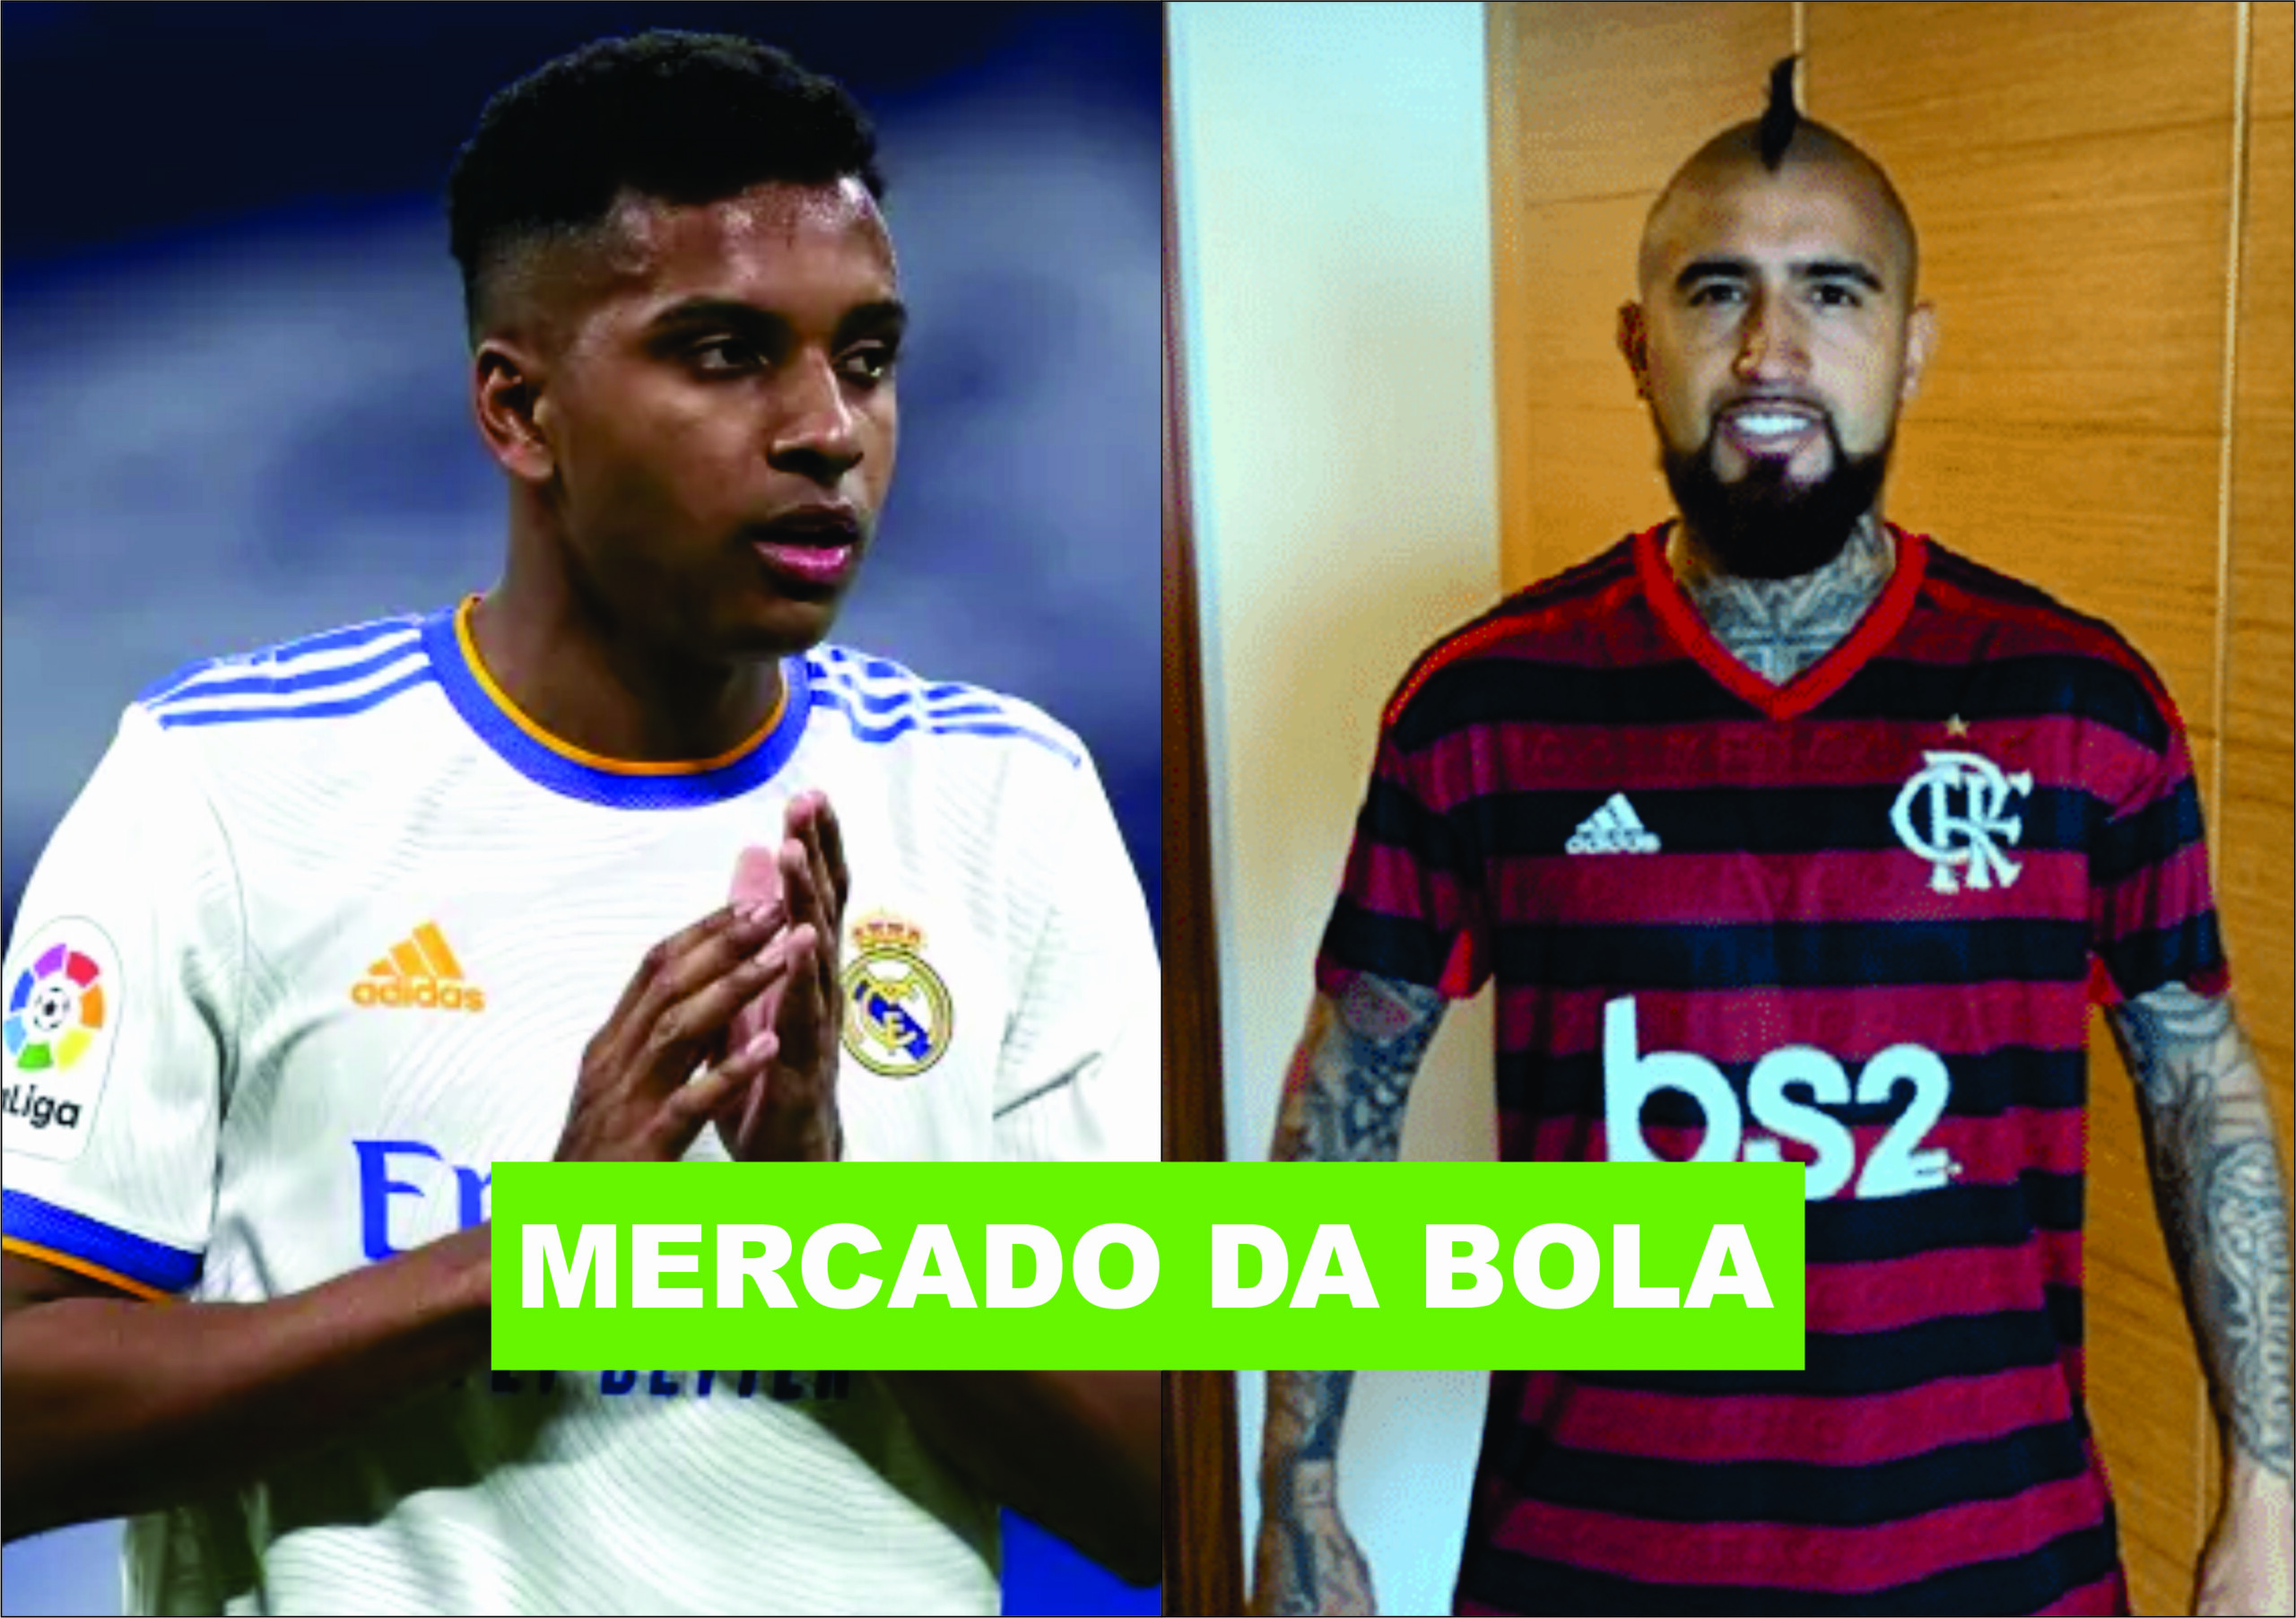 Mercado da bola, Vidal chega hoje no Rio